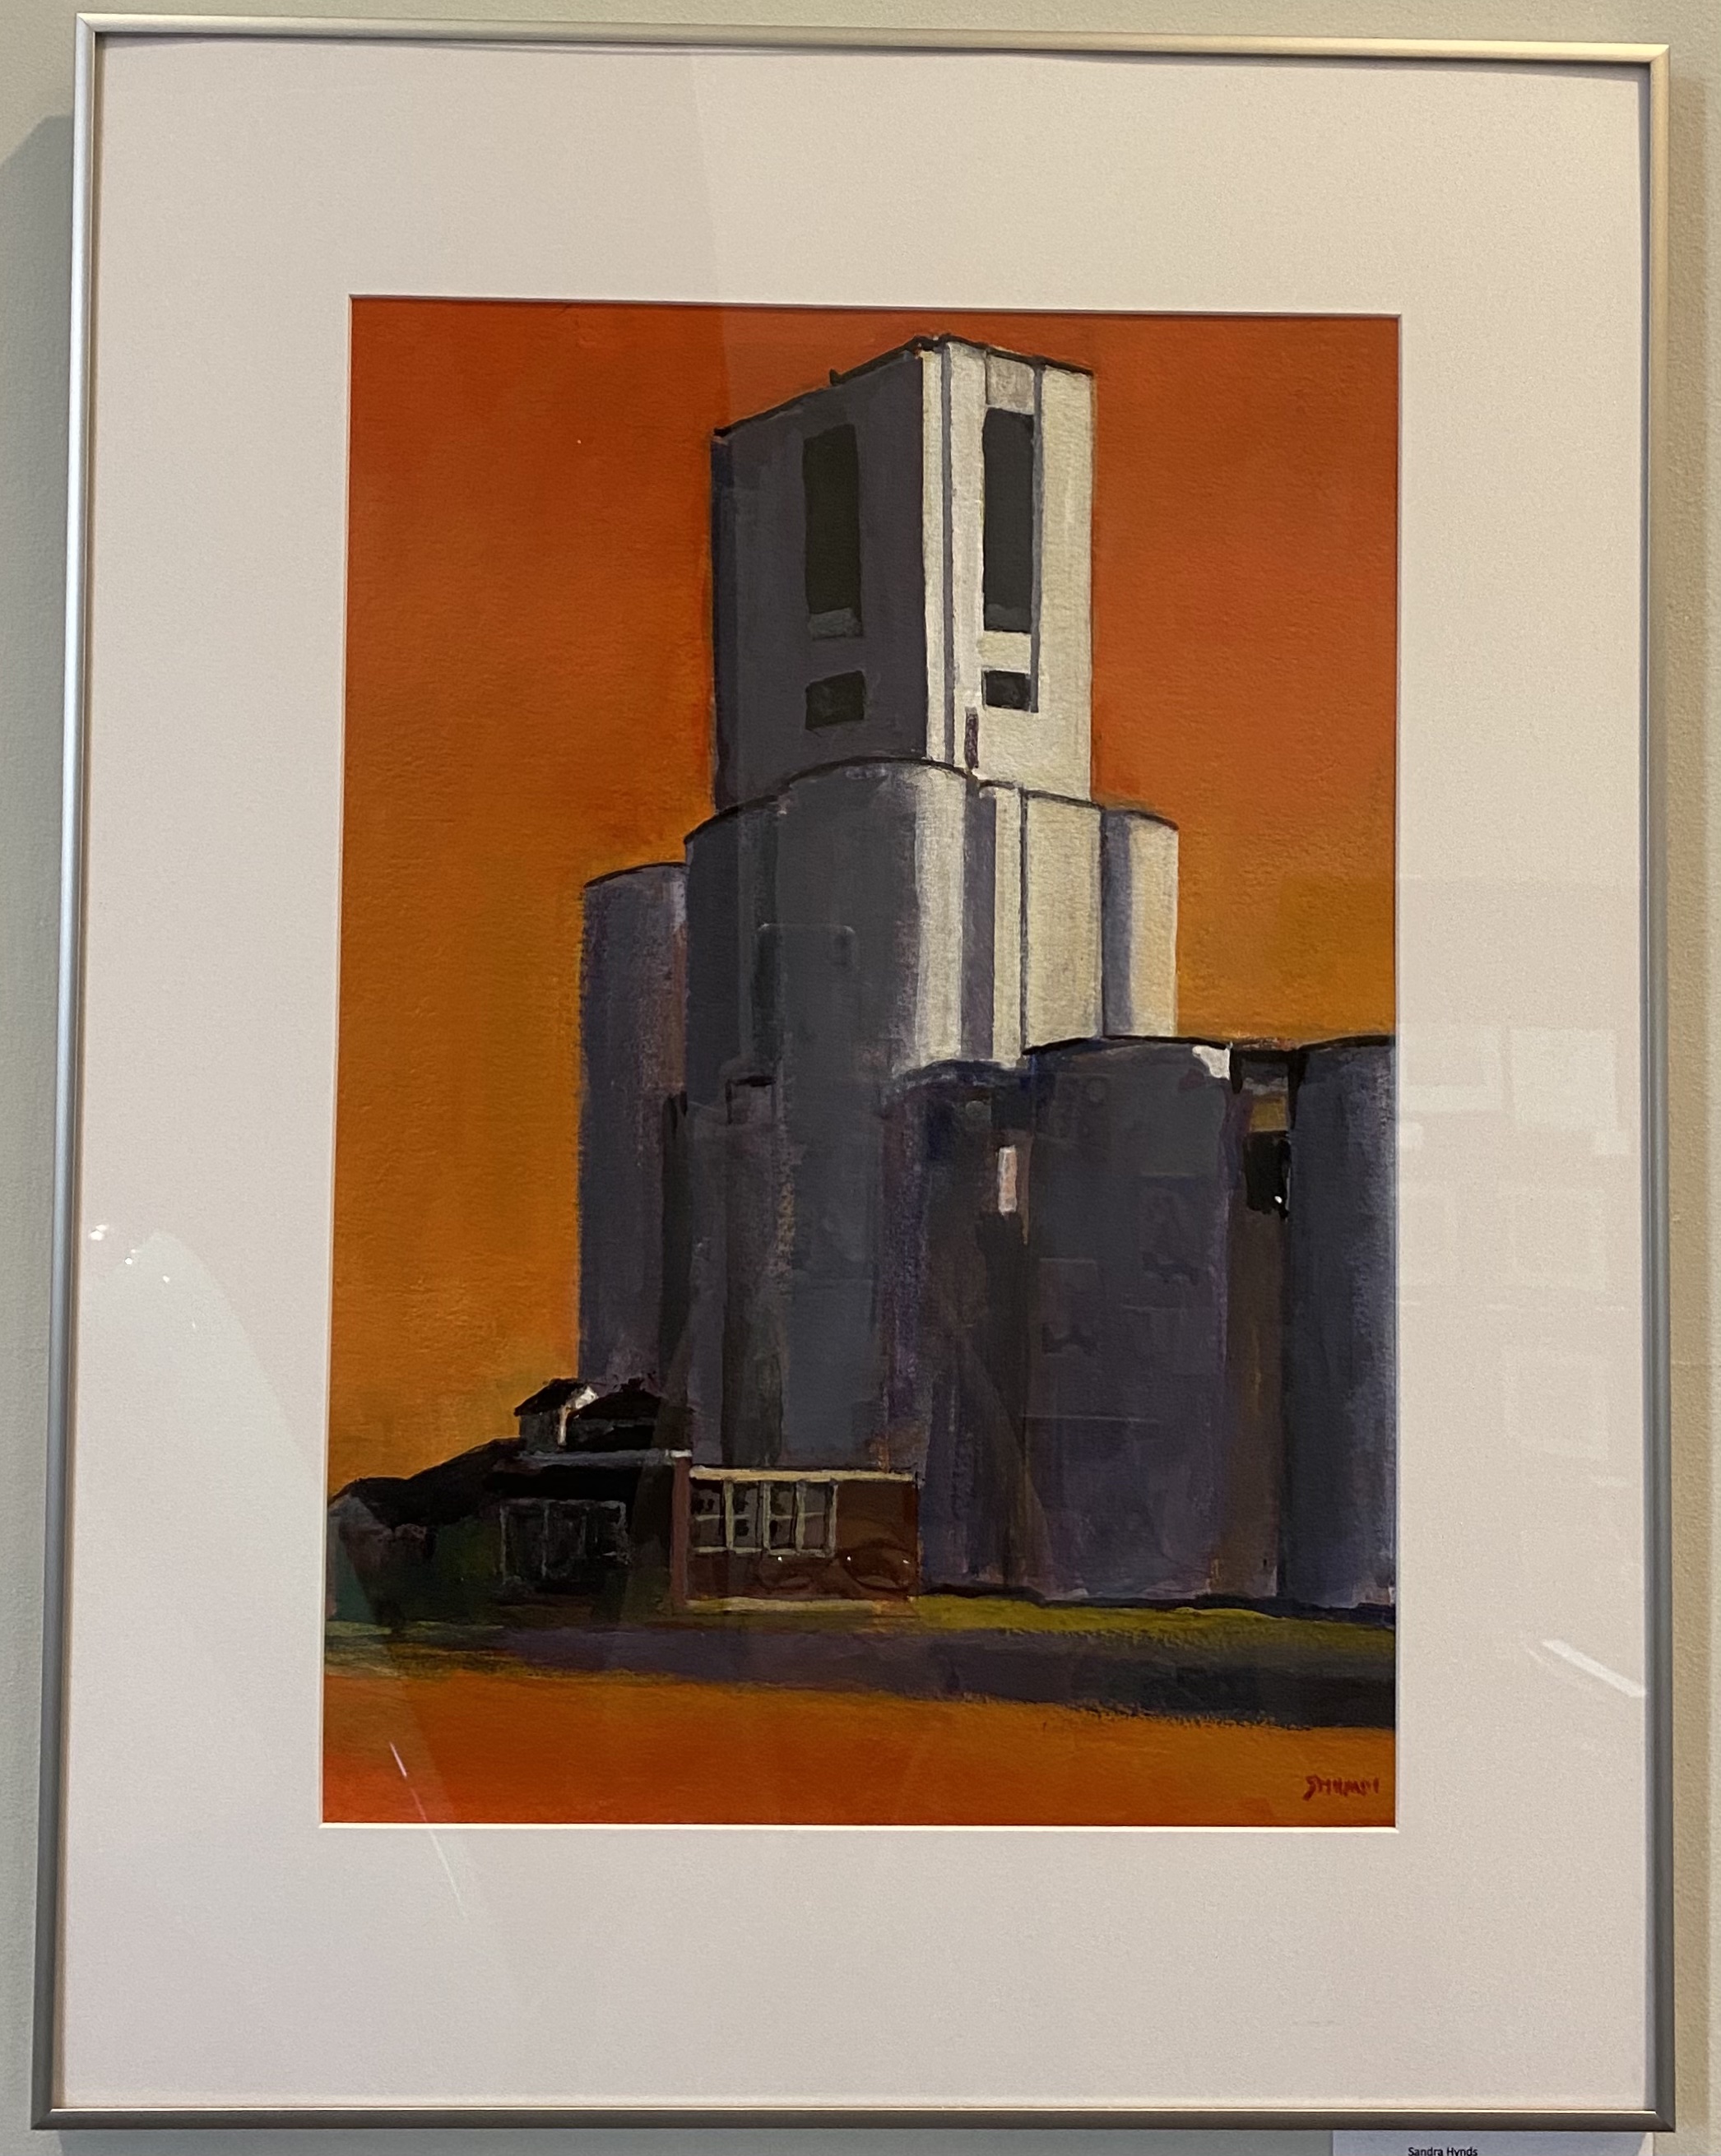 Grain Elevator
Acrylic on Paper
27” x 21”
$400.
